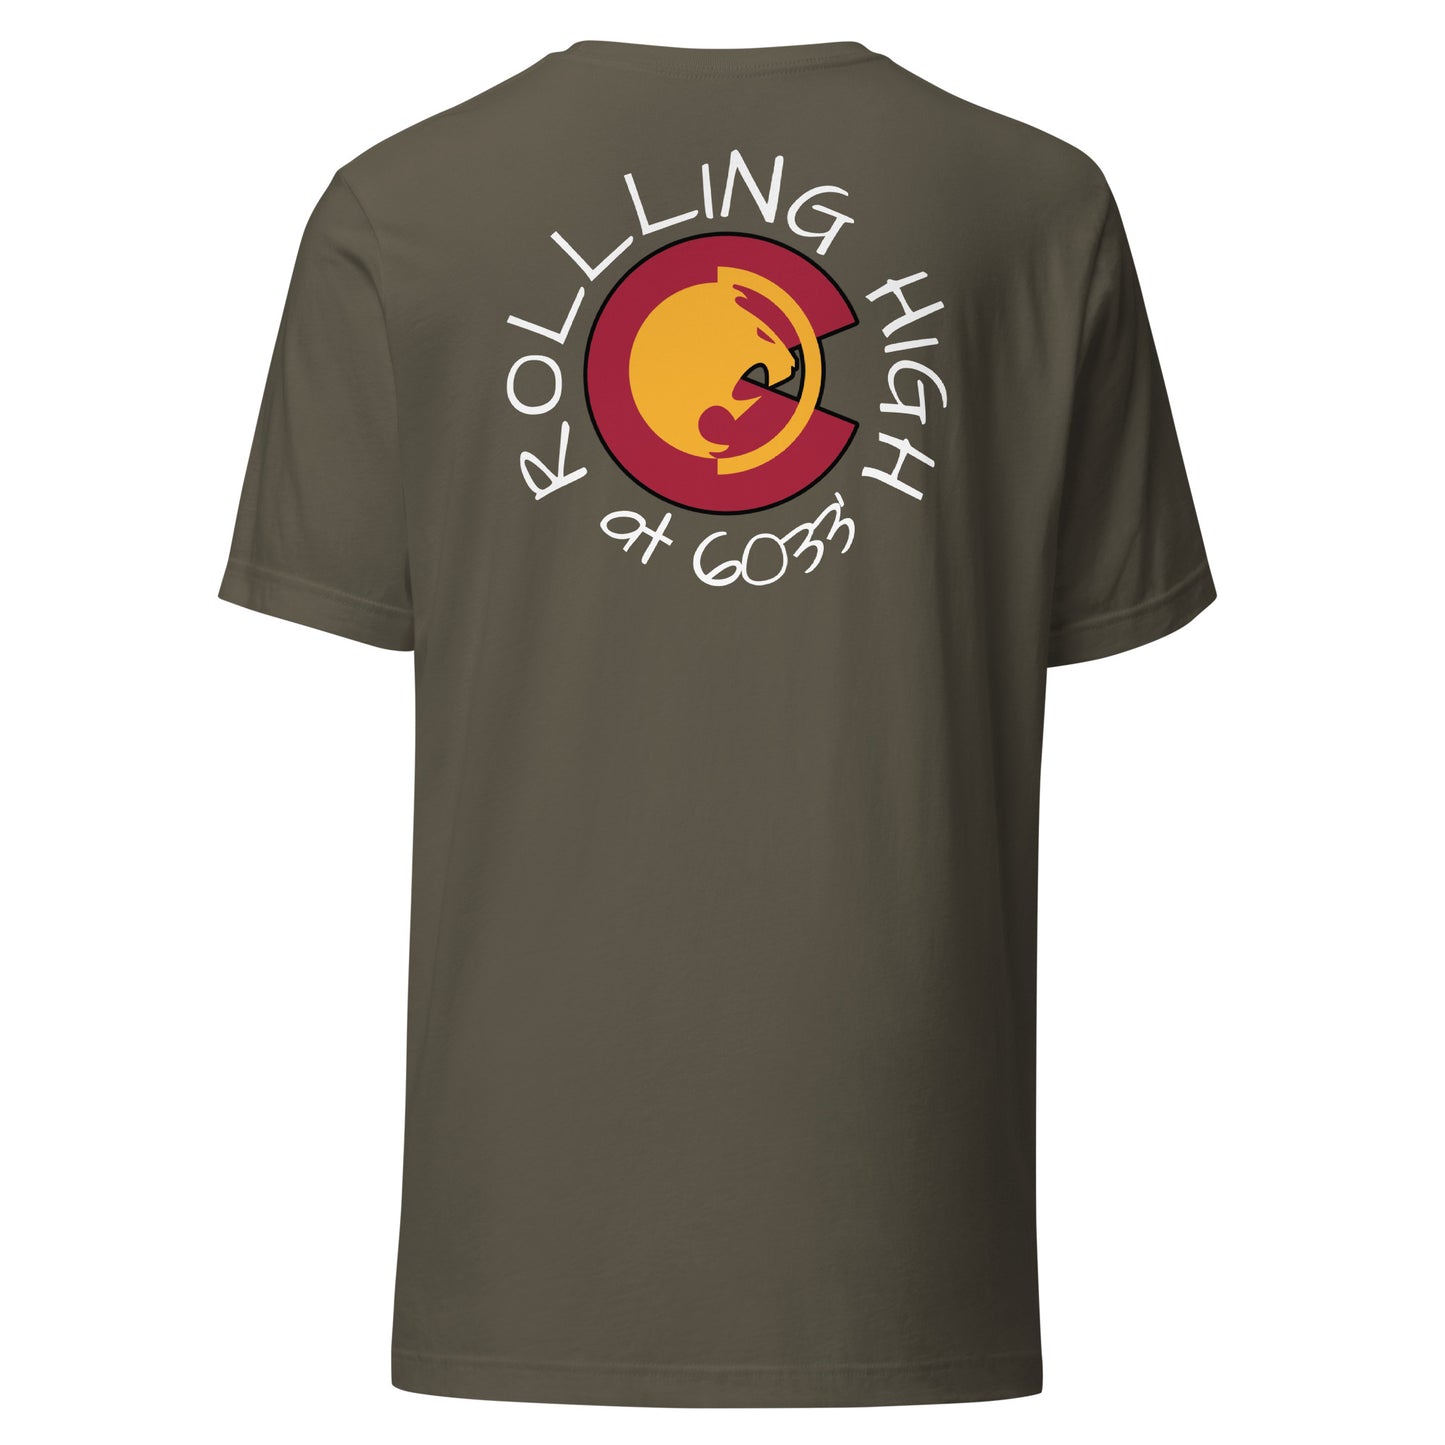 Rolling High Renzo Gracie Colorado t-shirt